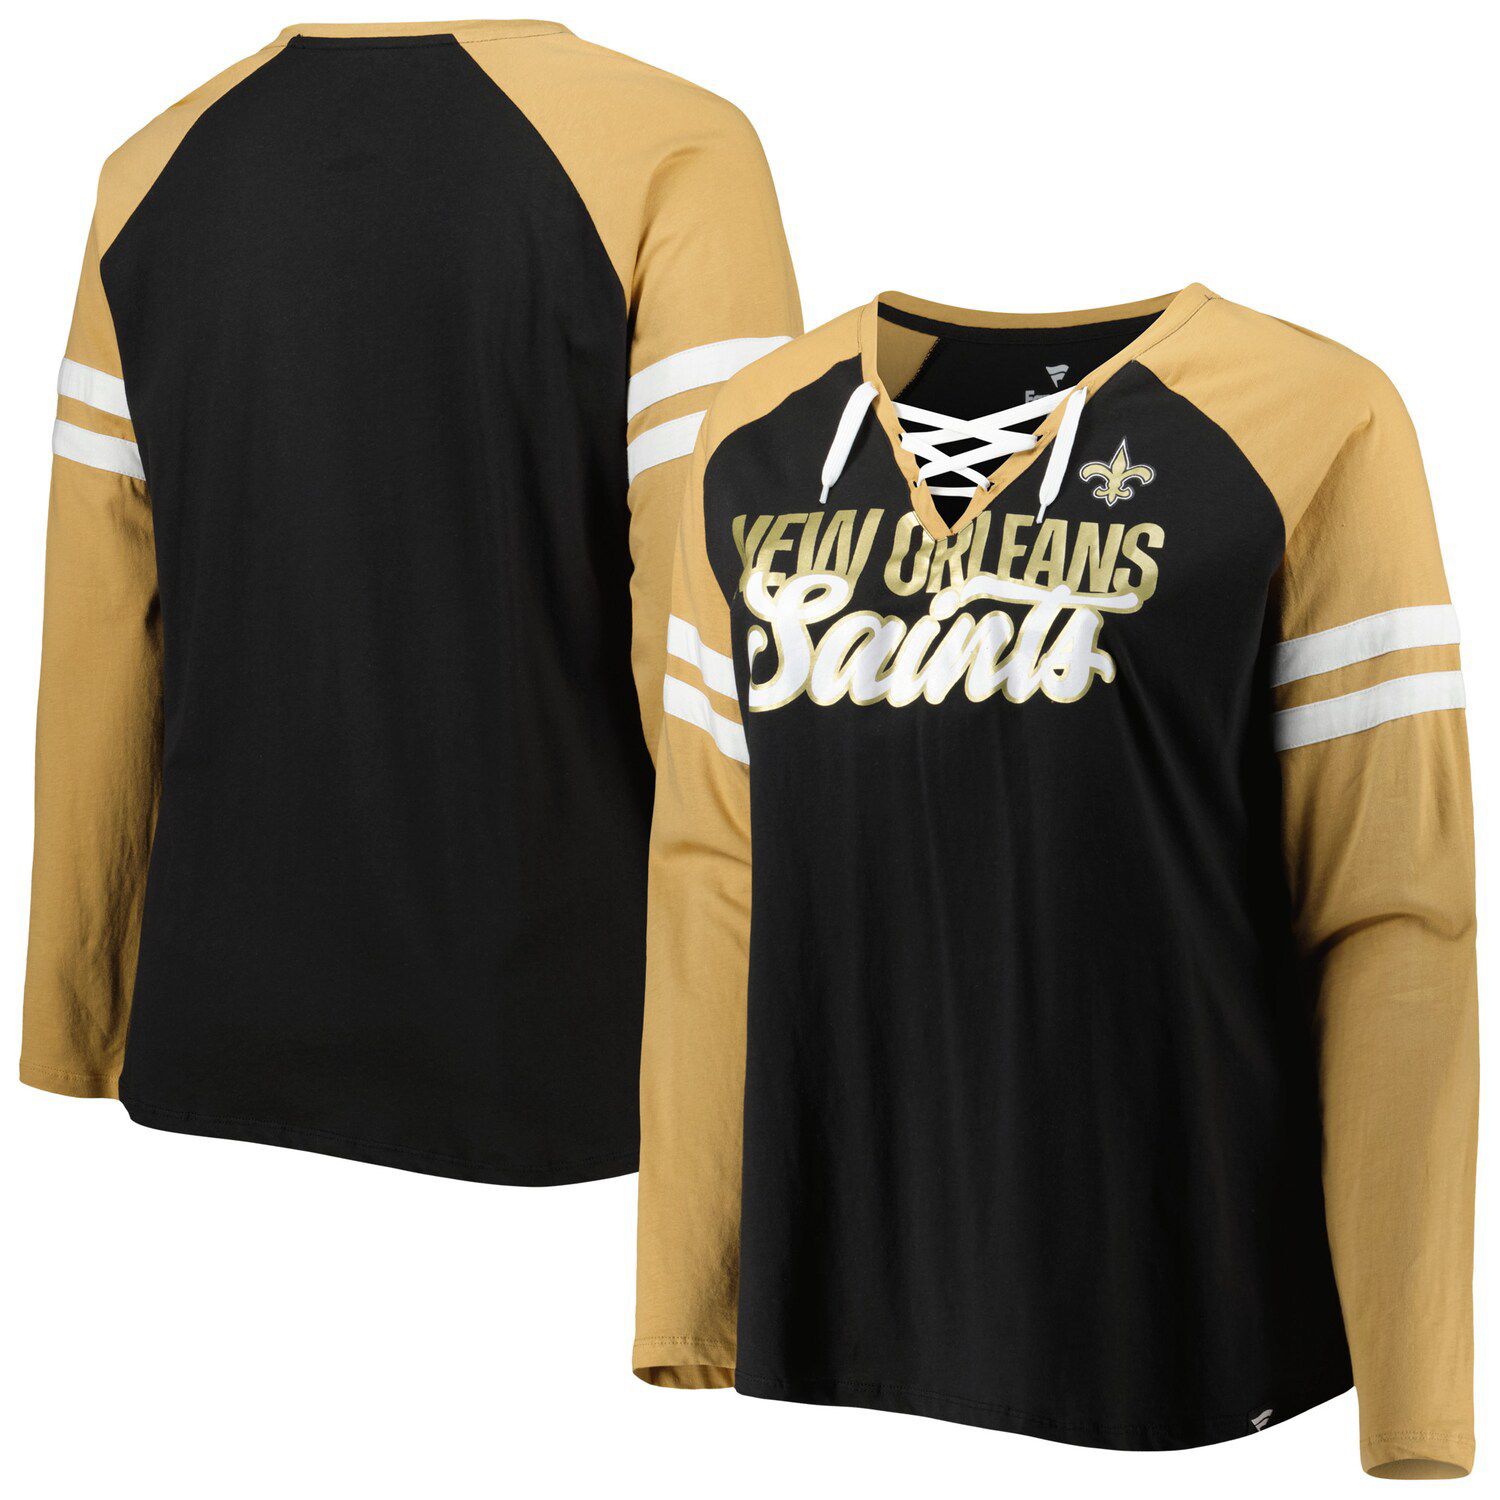 Women's Fanatics Branded Charcoal Vegas Golden Knights Spirit Lace-Up V-Neck Long Sleeve Jersey T-Shirt